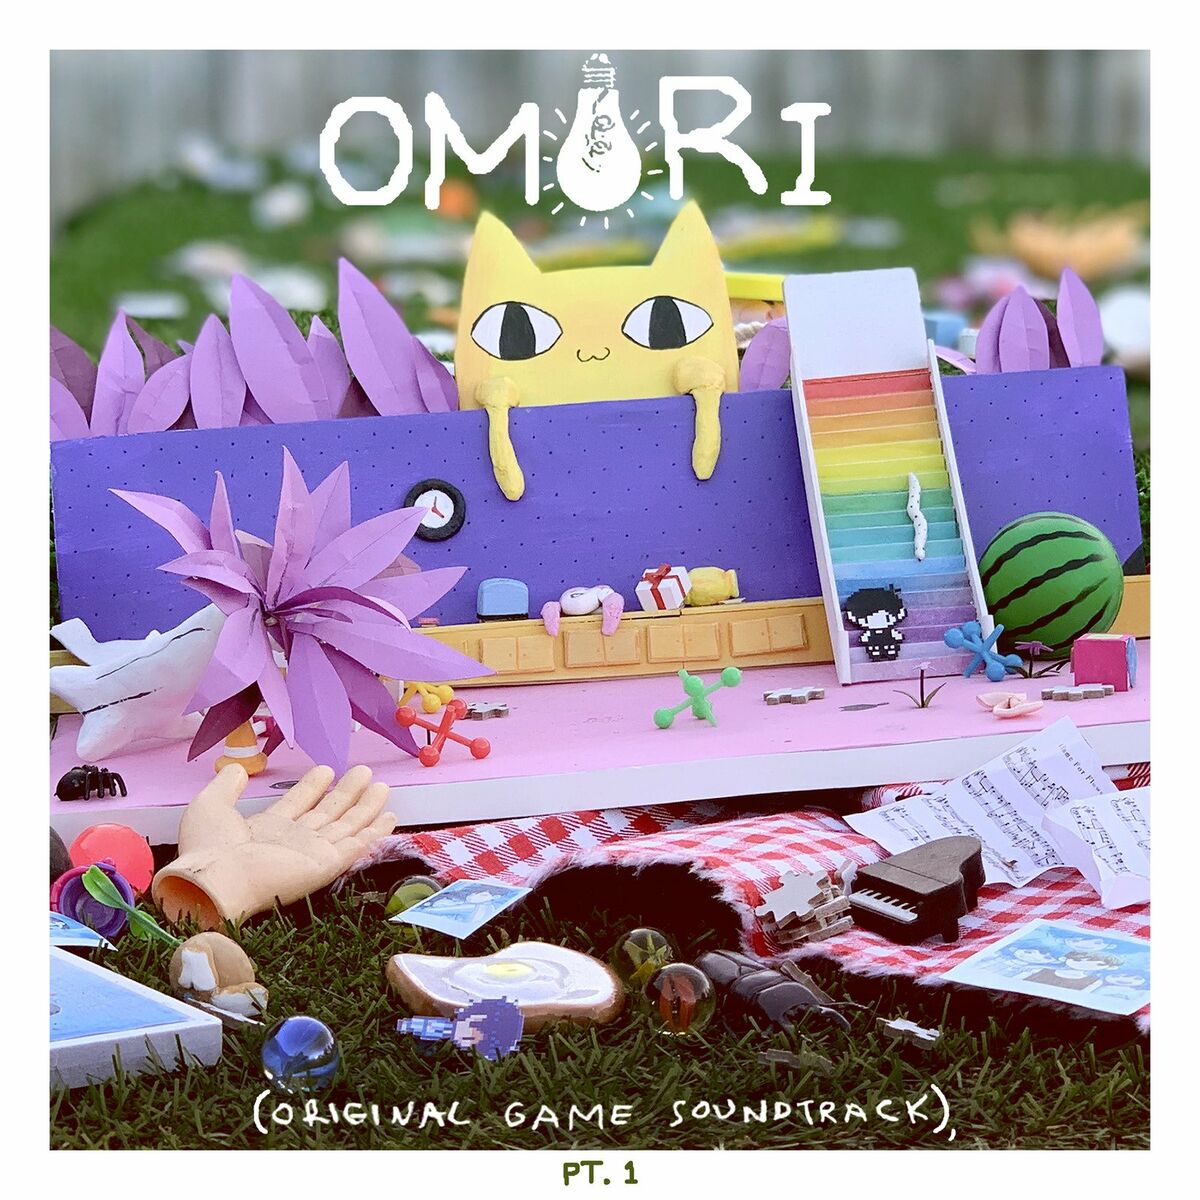 Omori - Omori (Original Game Soundtrack), Pt. 2: lyrics and songs 